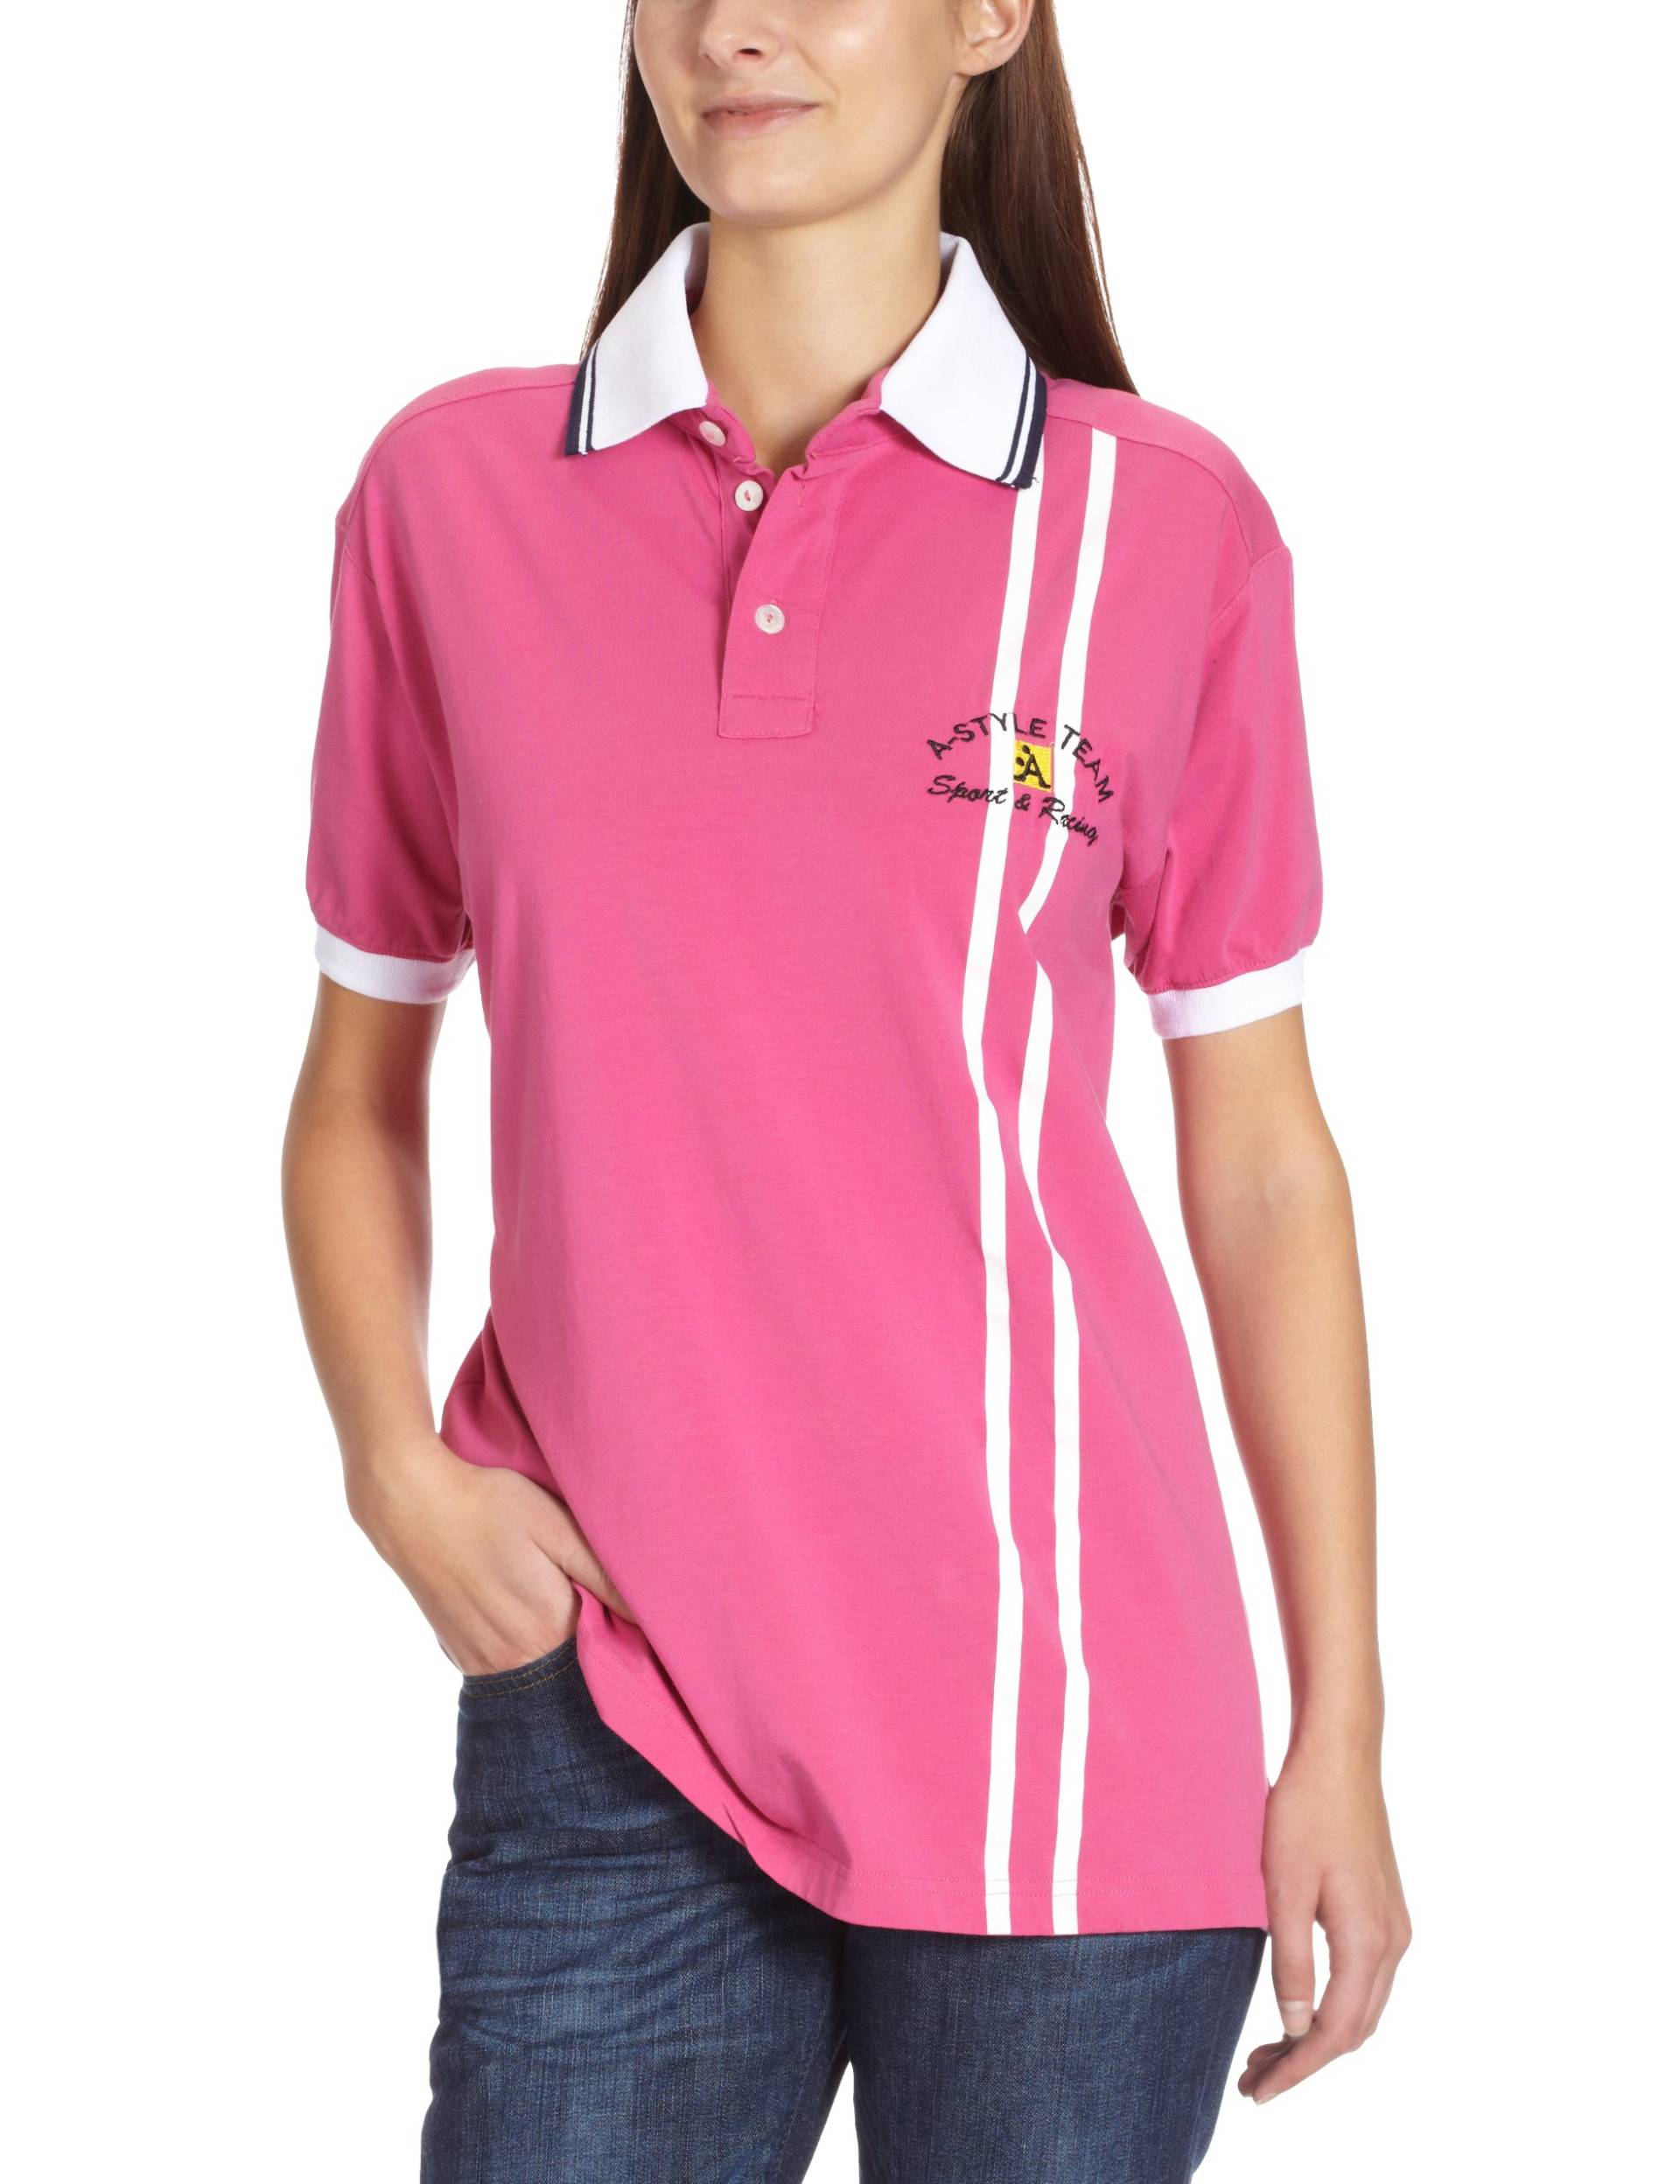 A-Style Polo Shirt Stripes, Rosa, XL von A-Style